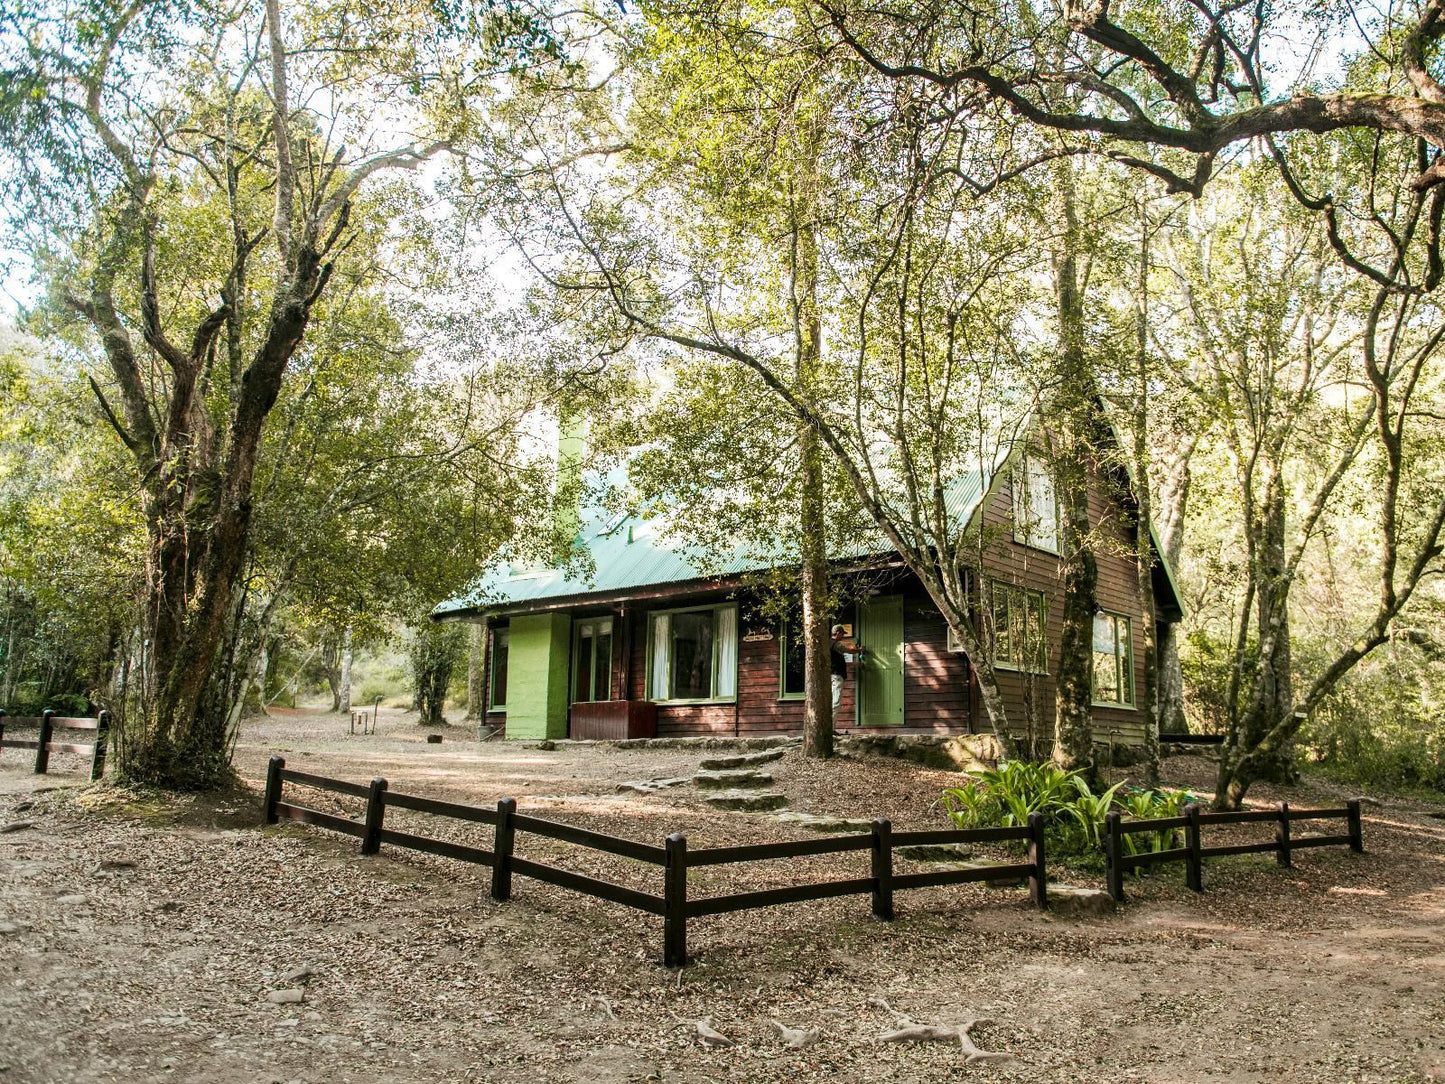 Rockwood Lodges Howick Kwazulu Natal South Africa Cabin, Building, Architecture, Tree, Plant, Nature, Wood